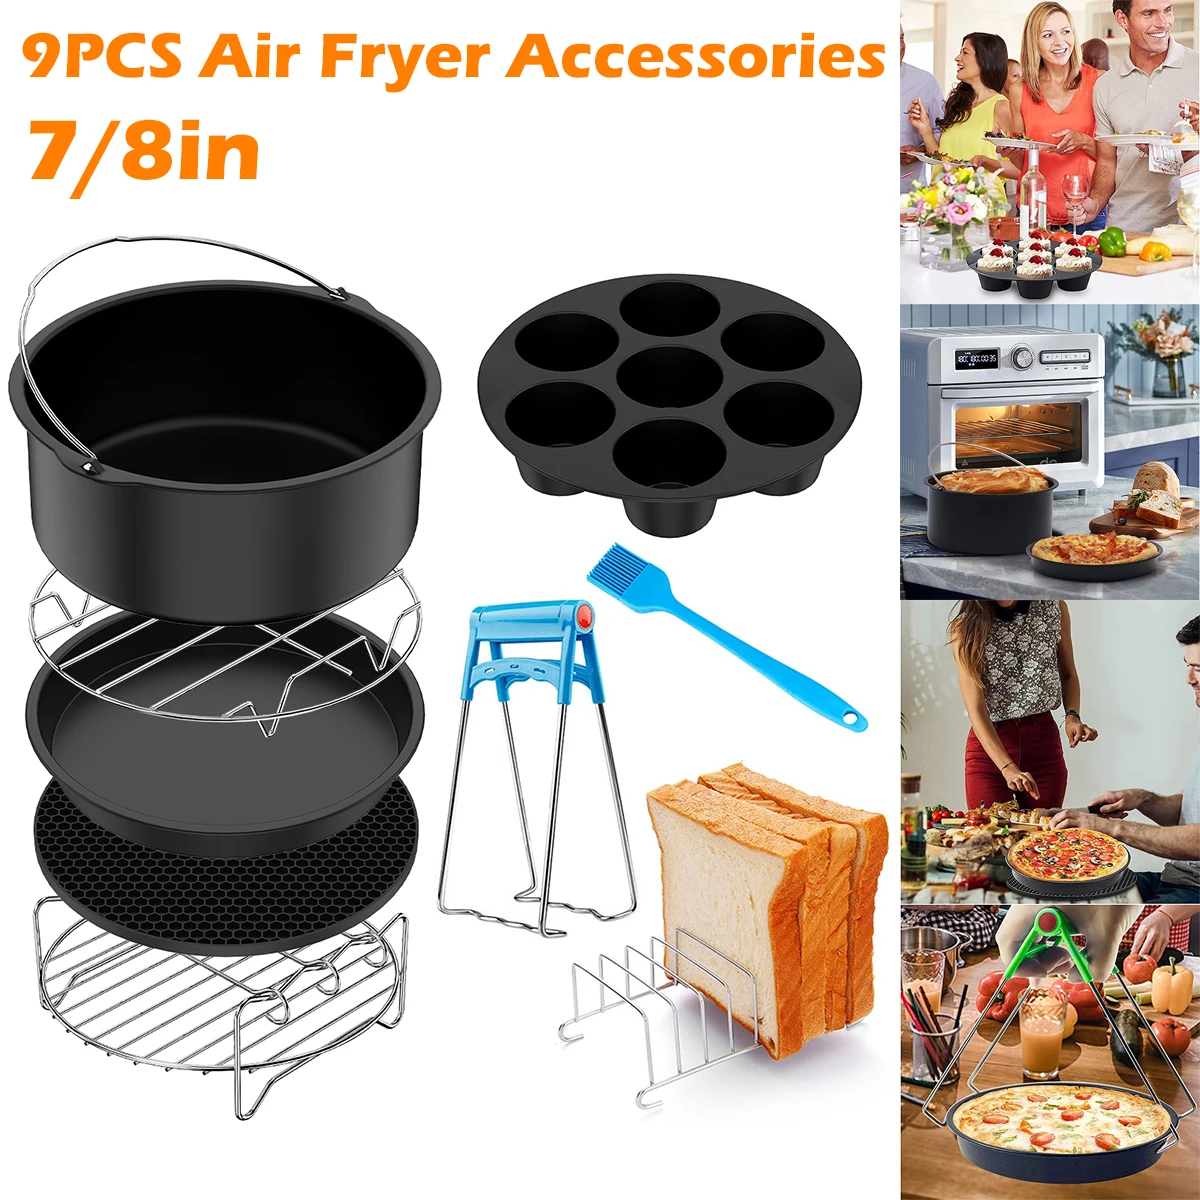 

9 Pcs Air Fryer Accessories Set Food-grade Air Fryer Accessories with Cake Basket Pizza Pan Stainless Steel Skewer Rack Oil